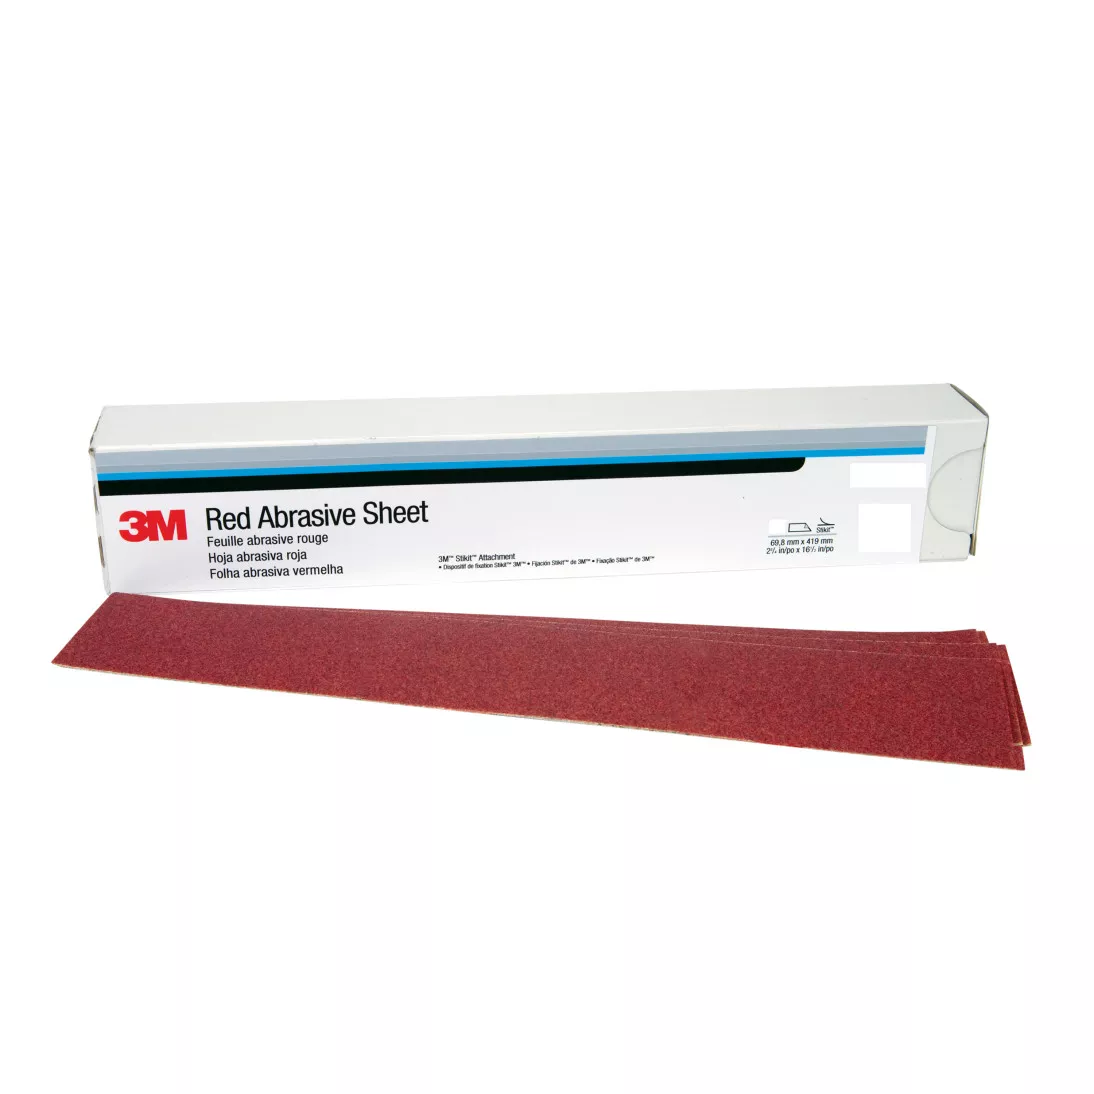 3M™ Red Abrasive Stikit™ Sheet, 01680, 40, 2-3/4 in x 16 1/2 in, 25
sheets per carton, 5 cartons per case